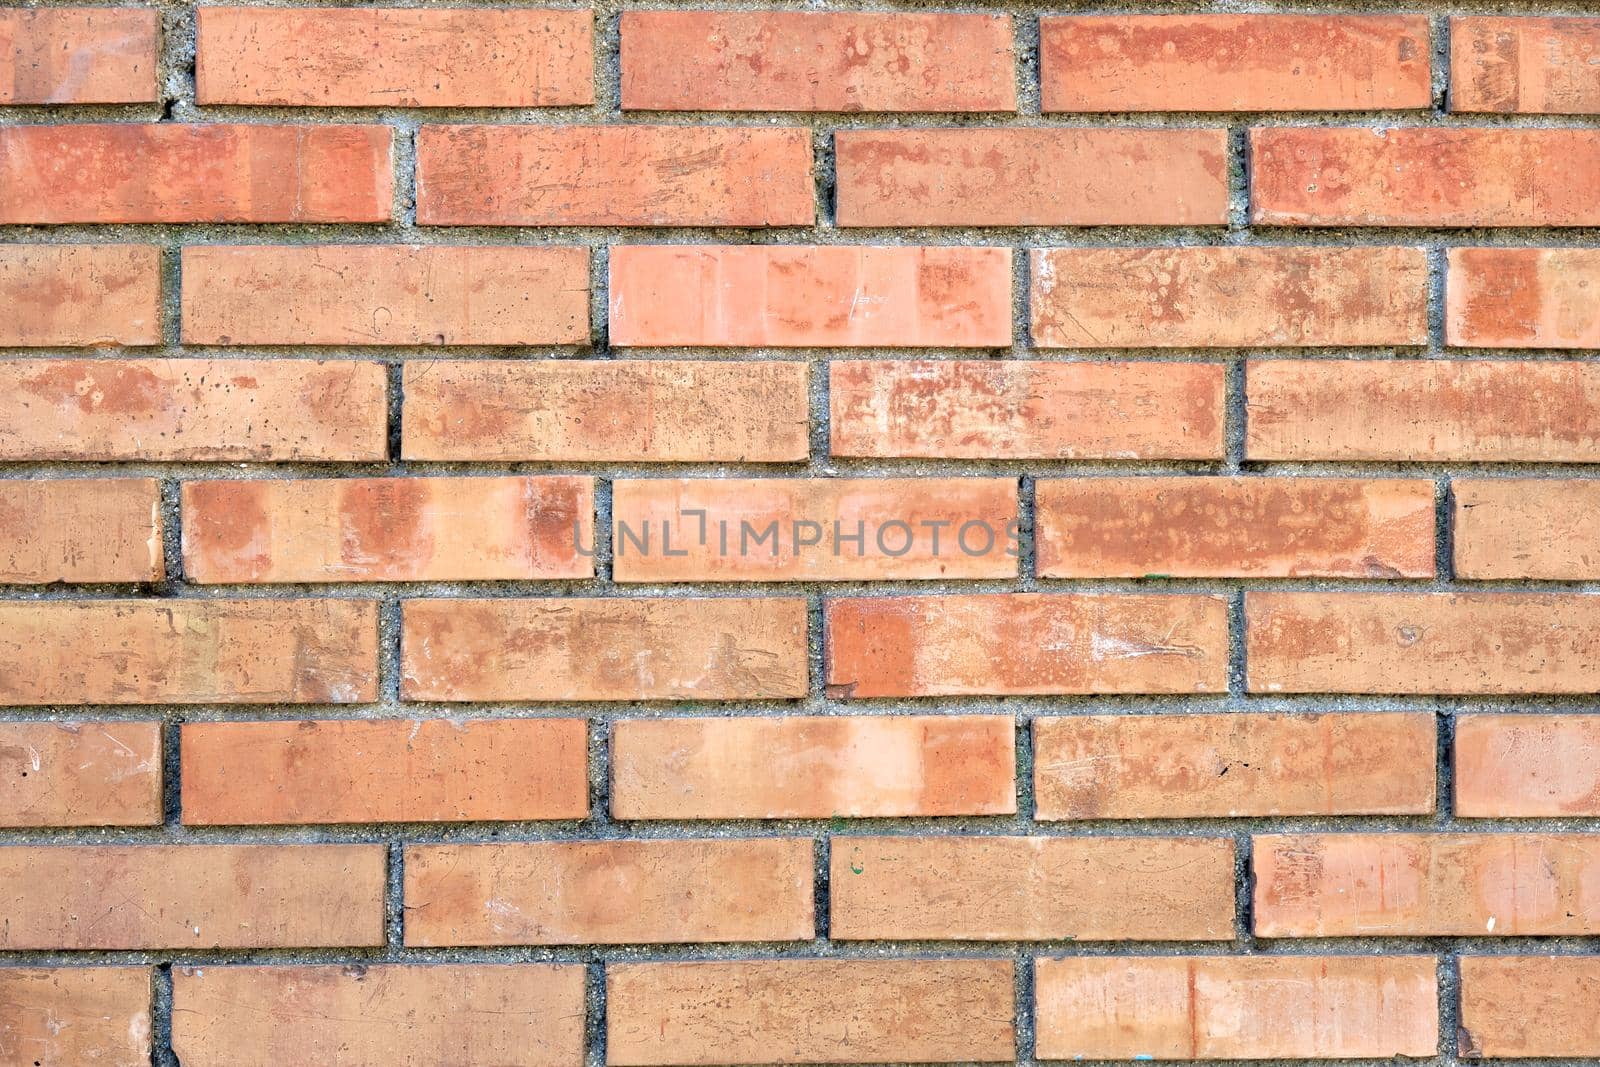 Wall made of orange bricks by elxeneize